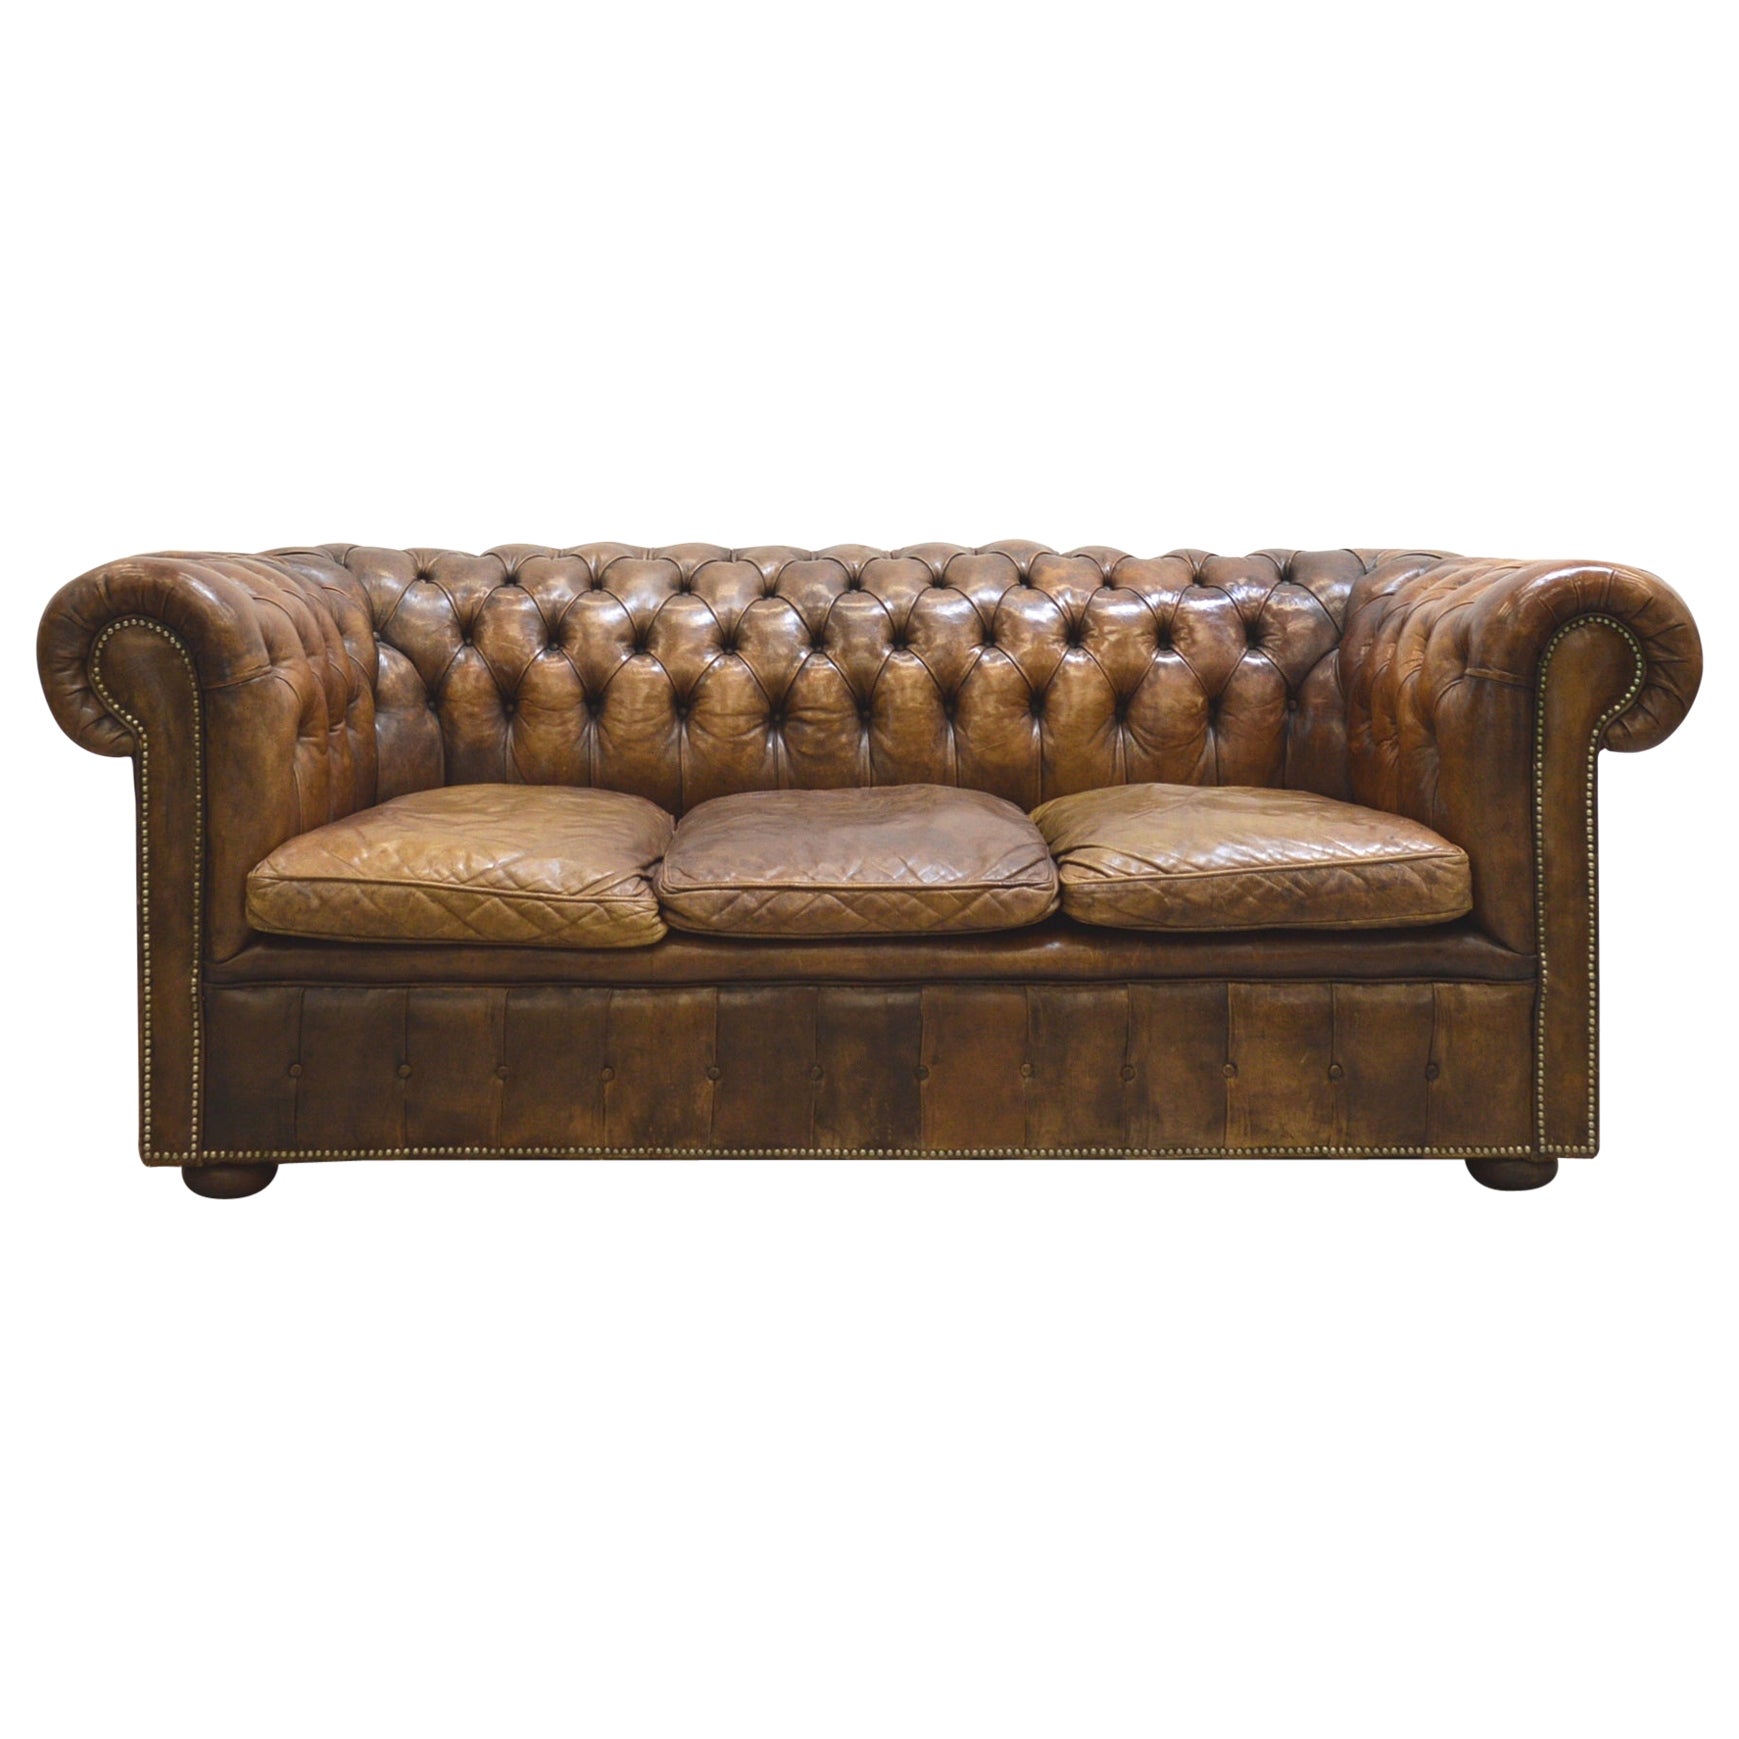 Antikes Vintage Chesterfield Club Sofa, handgefärbt, 1930er Jahre